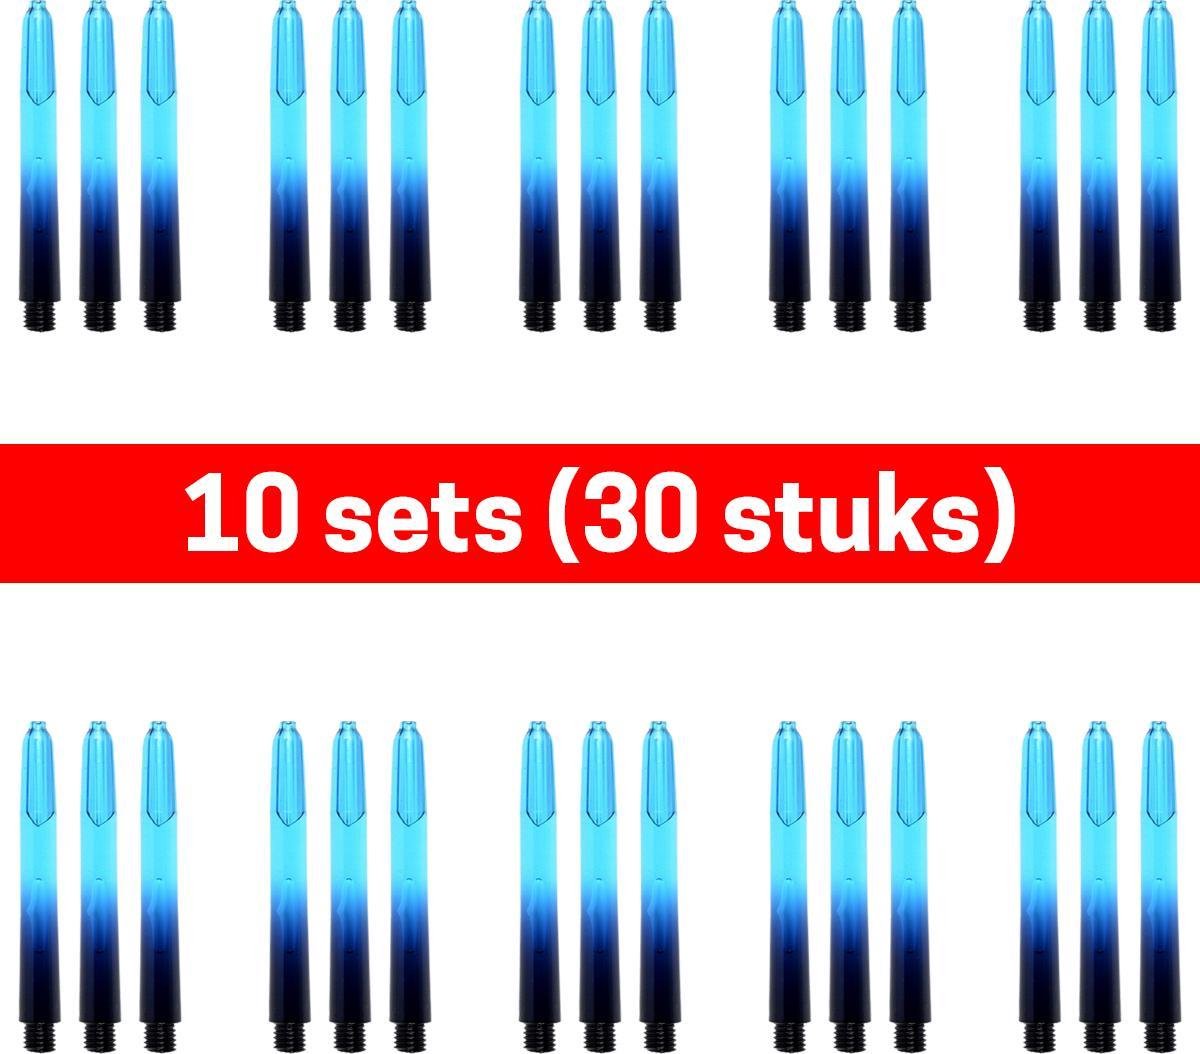 Dragon darts - Vignette - 10 sets (30 stuks) - darts shafts - zwart-aquablauw - short - dart shafts - dartshafts